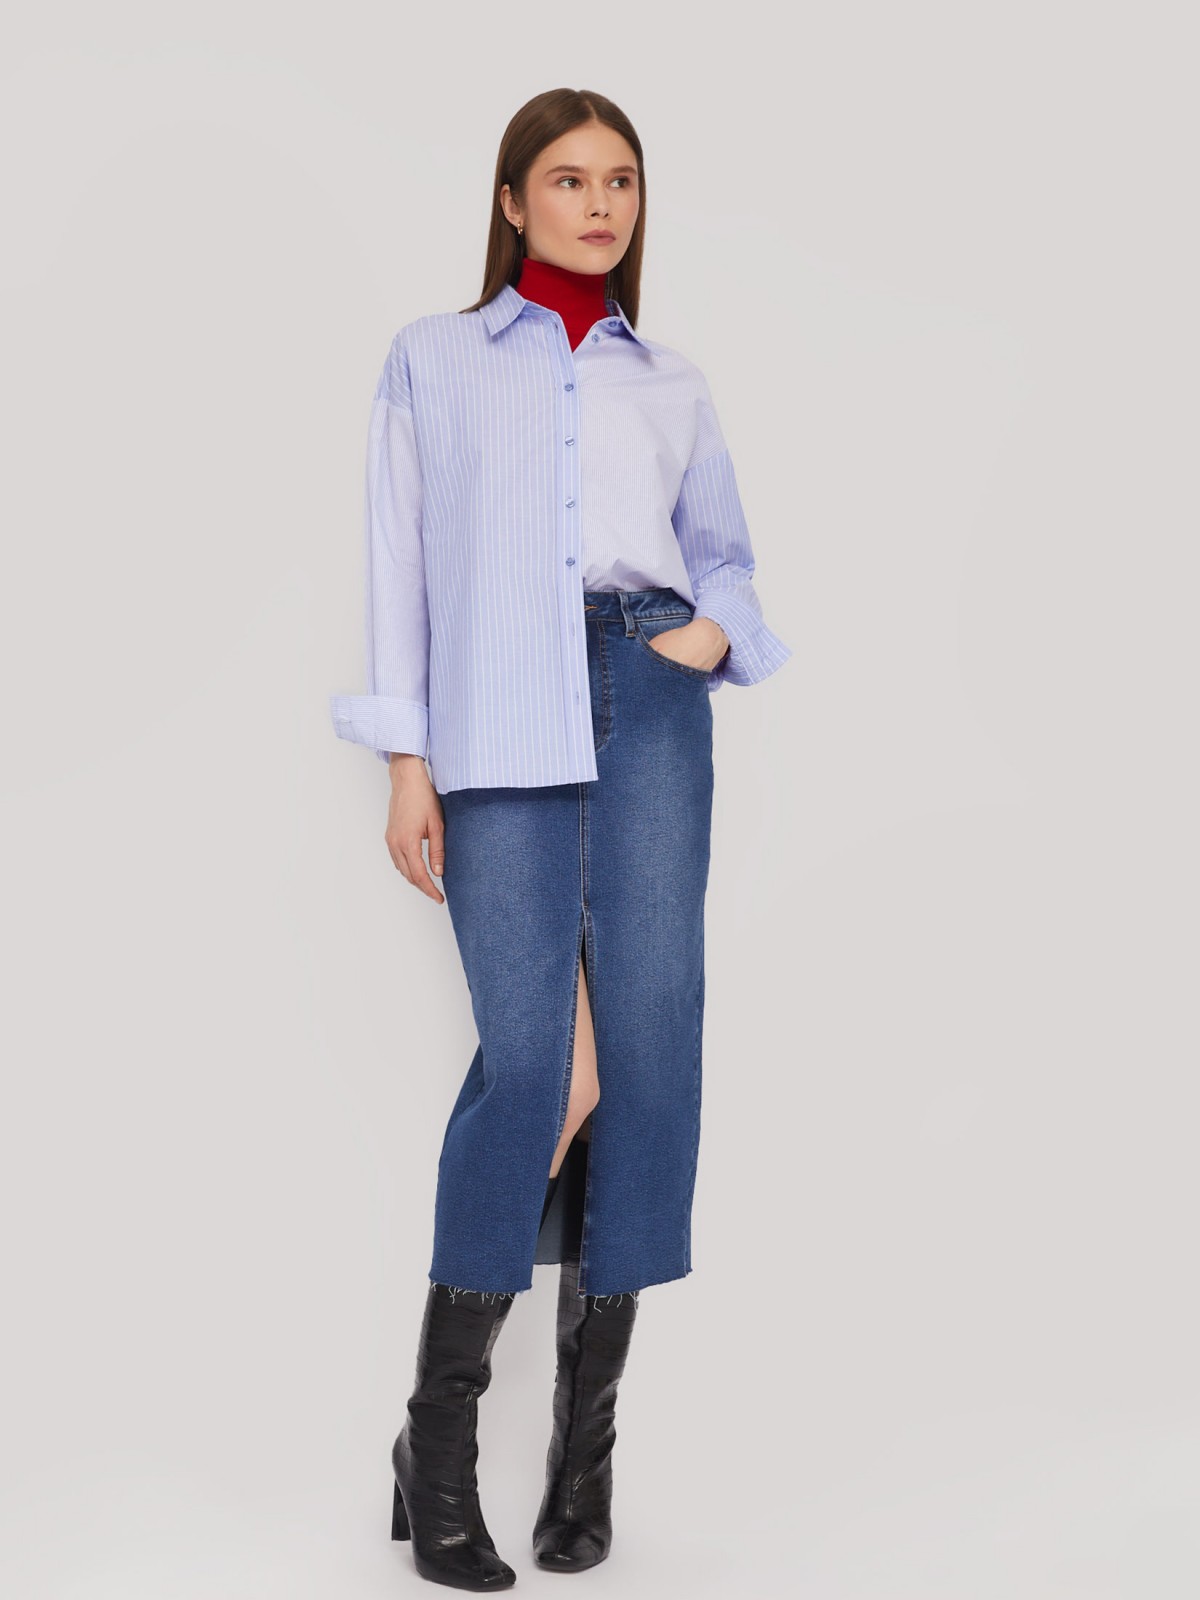 Рубашка оверсайз силуэта с узором в полоску zolla 024131159342, цвет светло-голубой, размер XS - фото 1